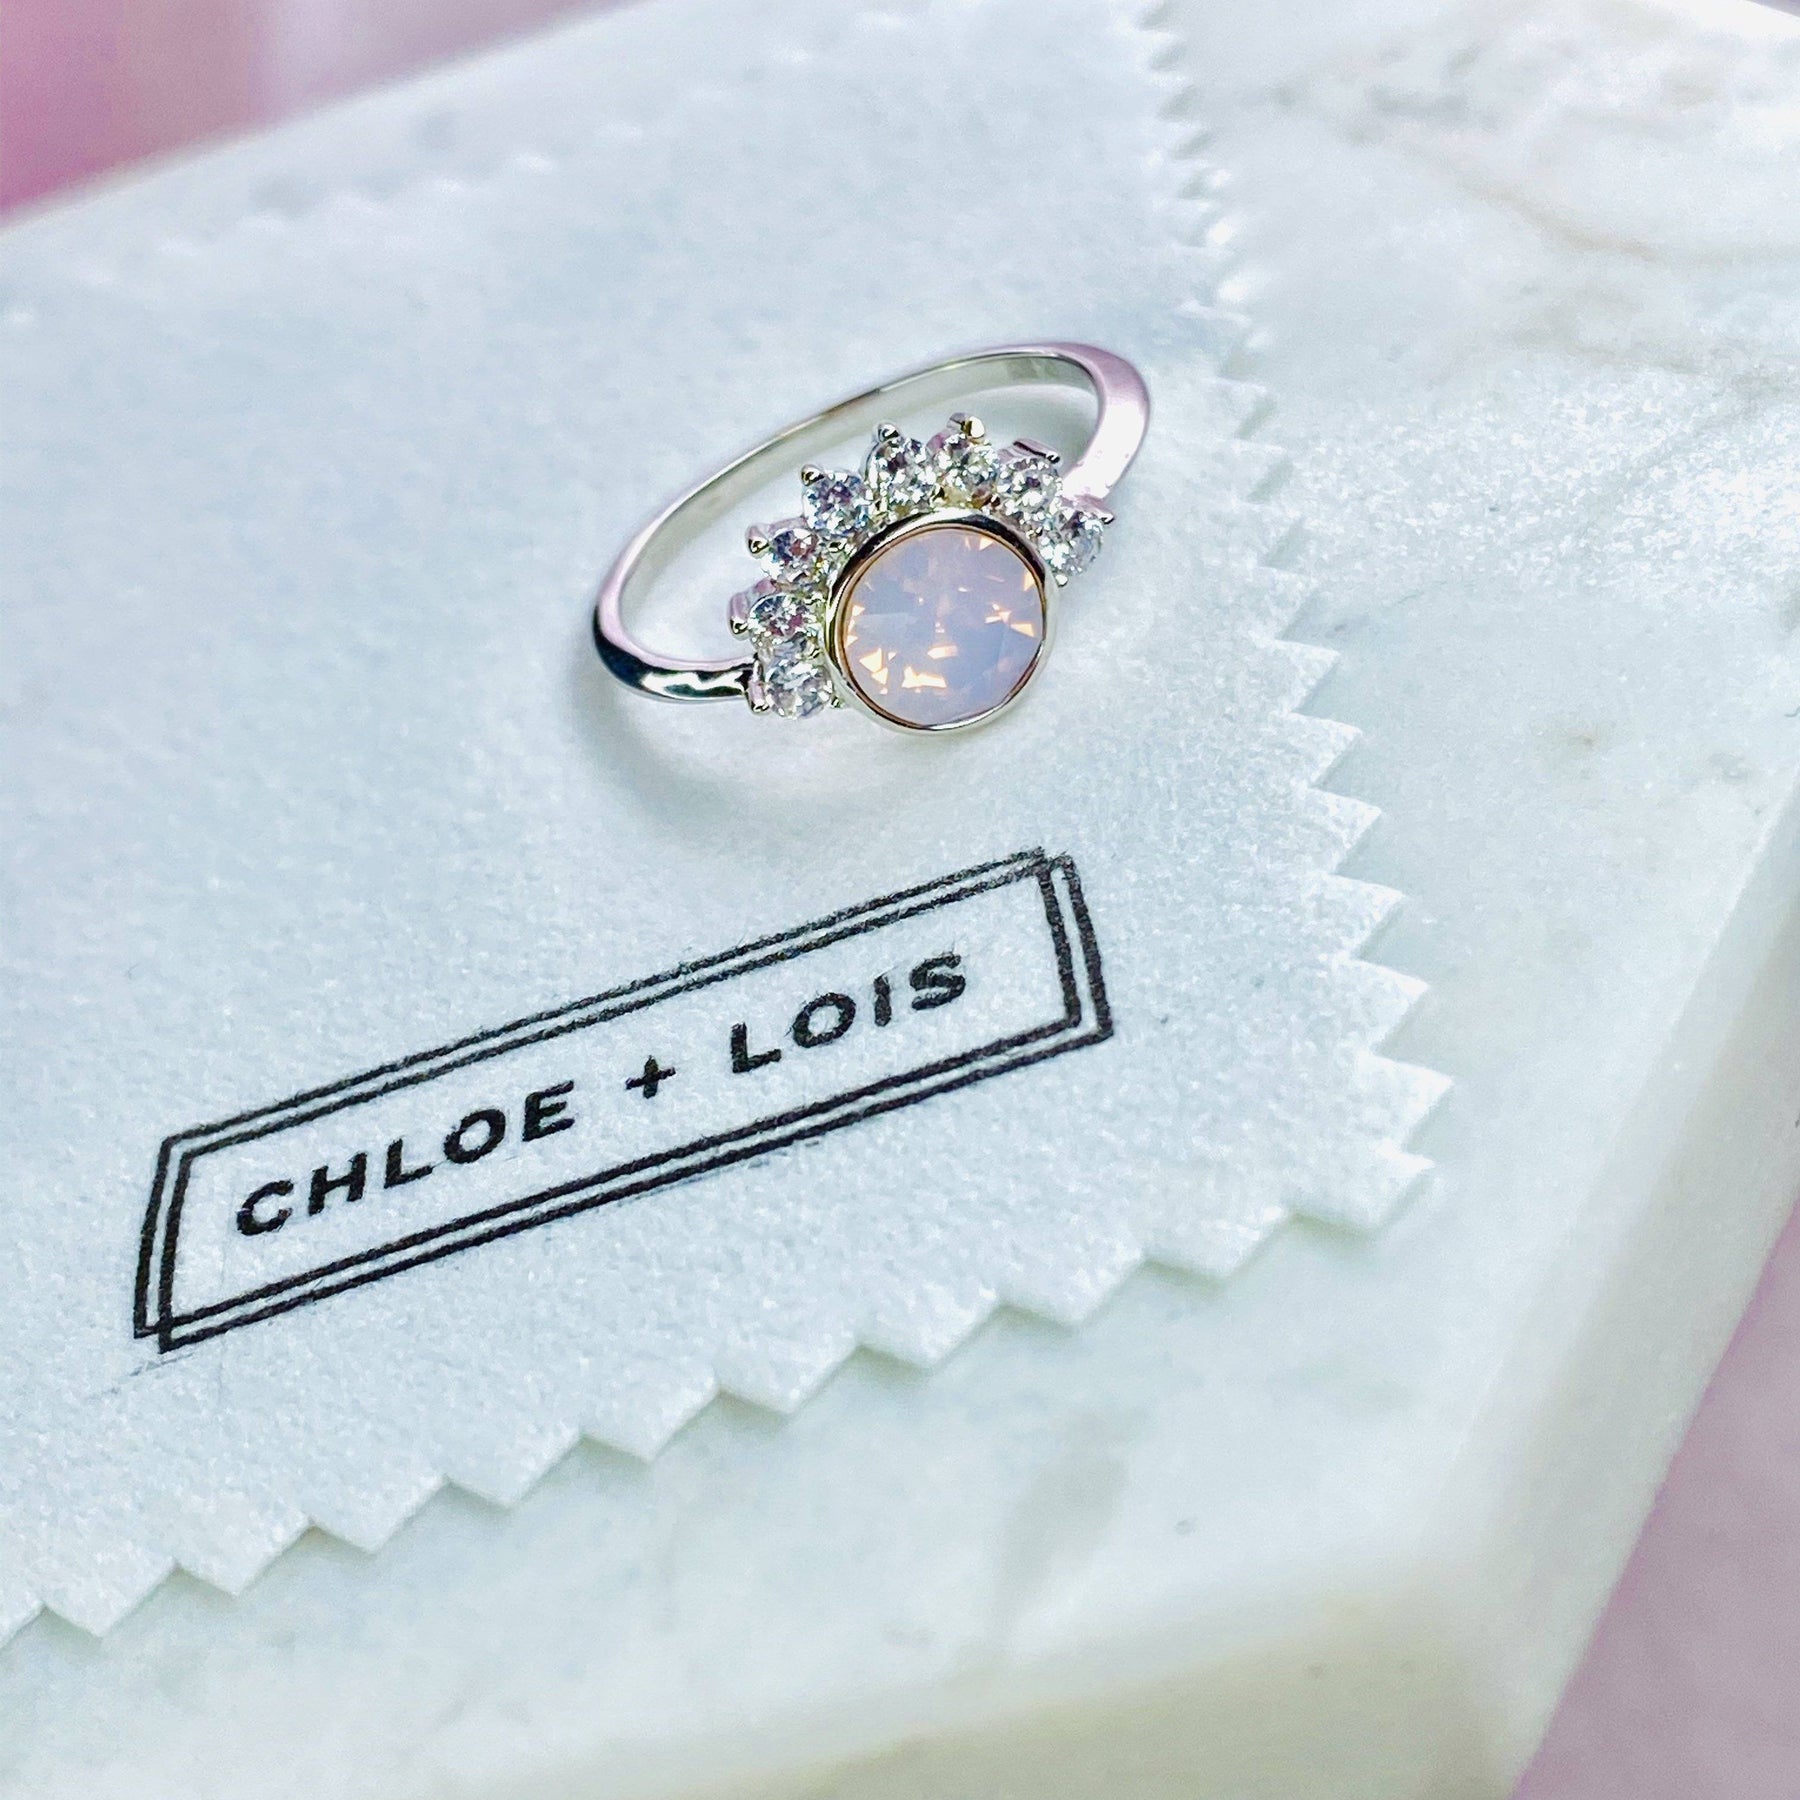 Chloe + Lois Jewelry Polishing Cloth